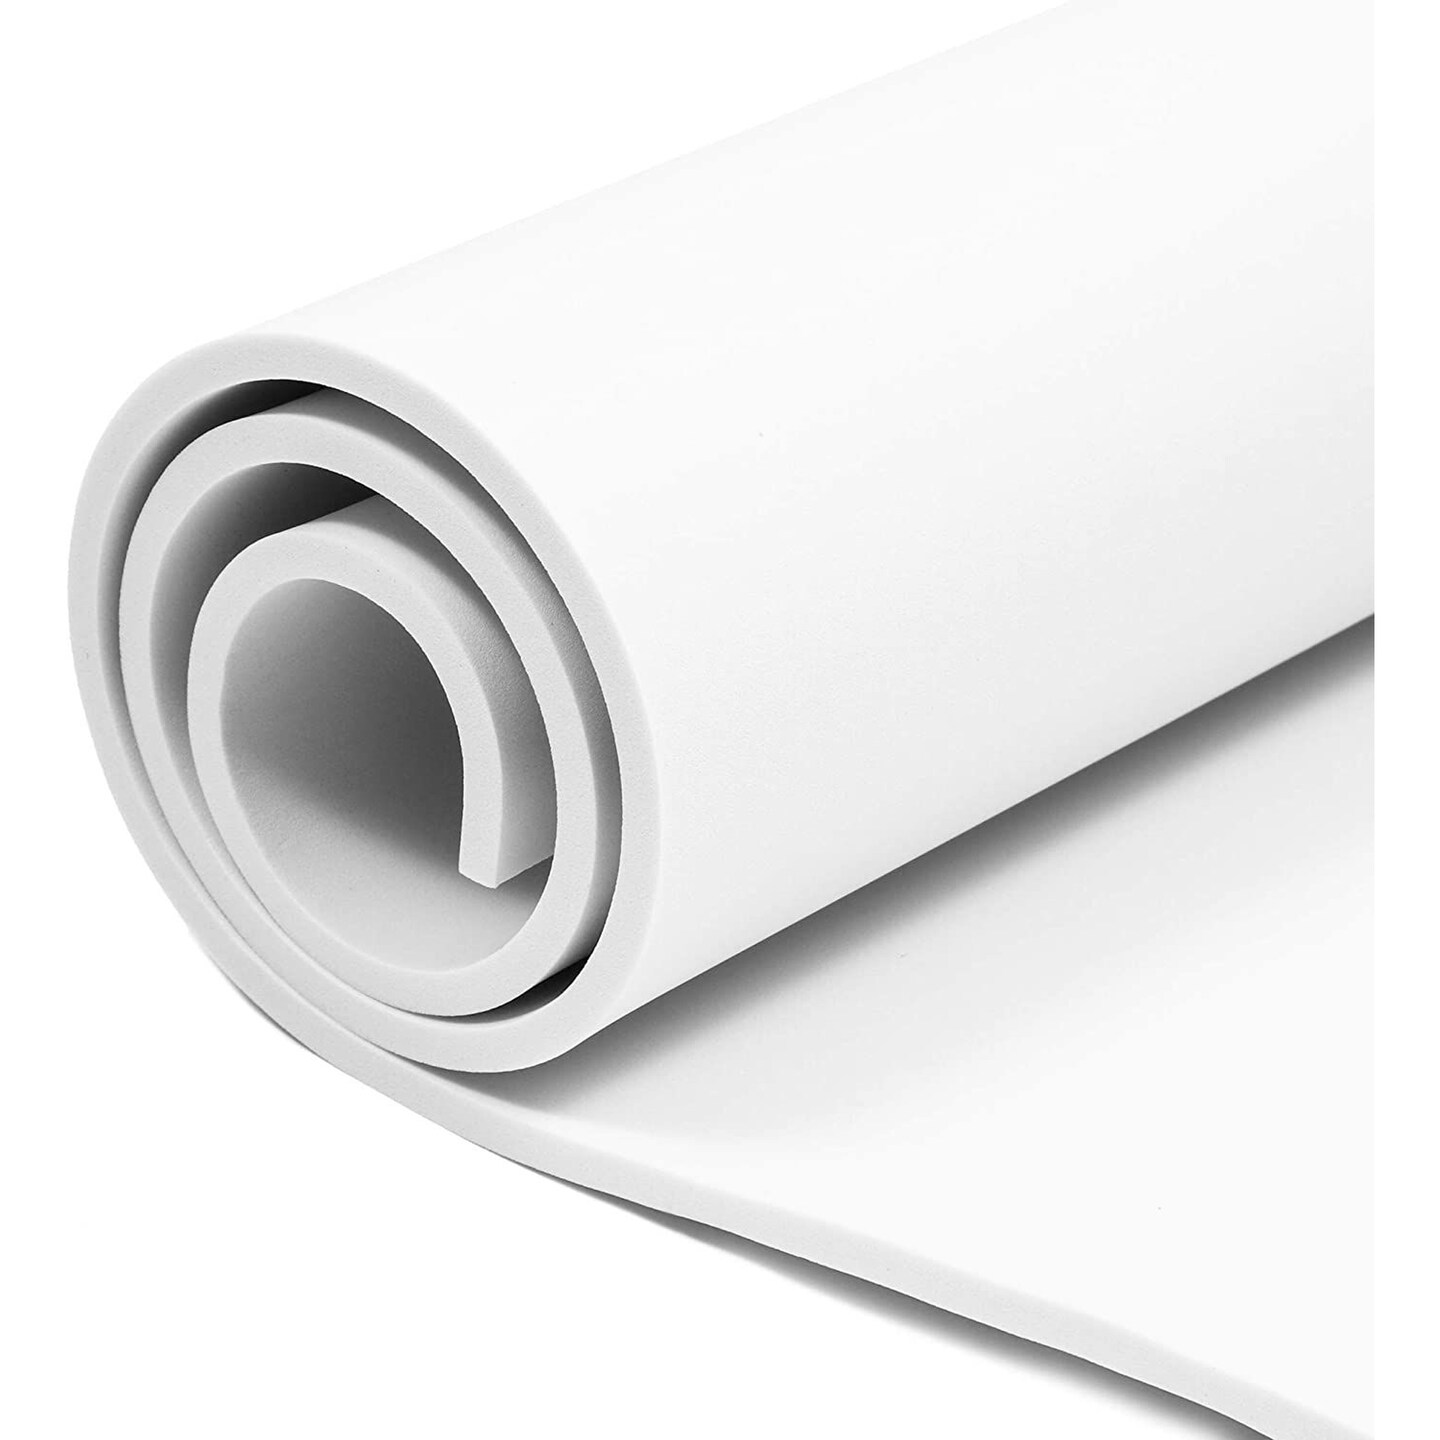 White Polystyrene Craft Foam Sheets for DIY Art (11 x 17 x 0.5